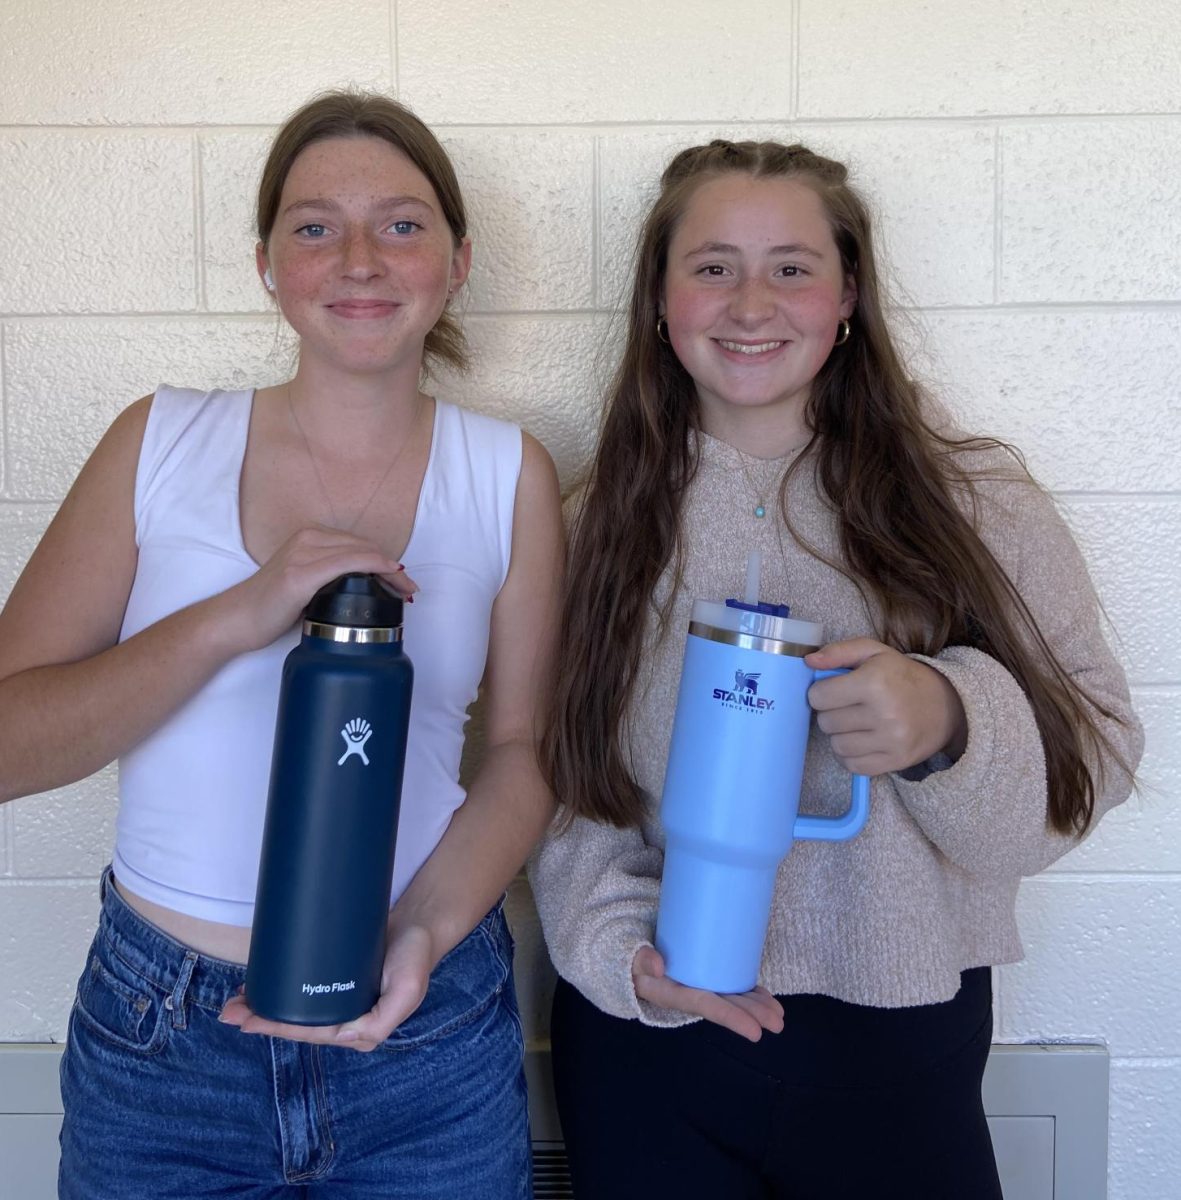 Stanley vs Hydro Flask: Which Water Bottle Is Better?